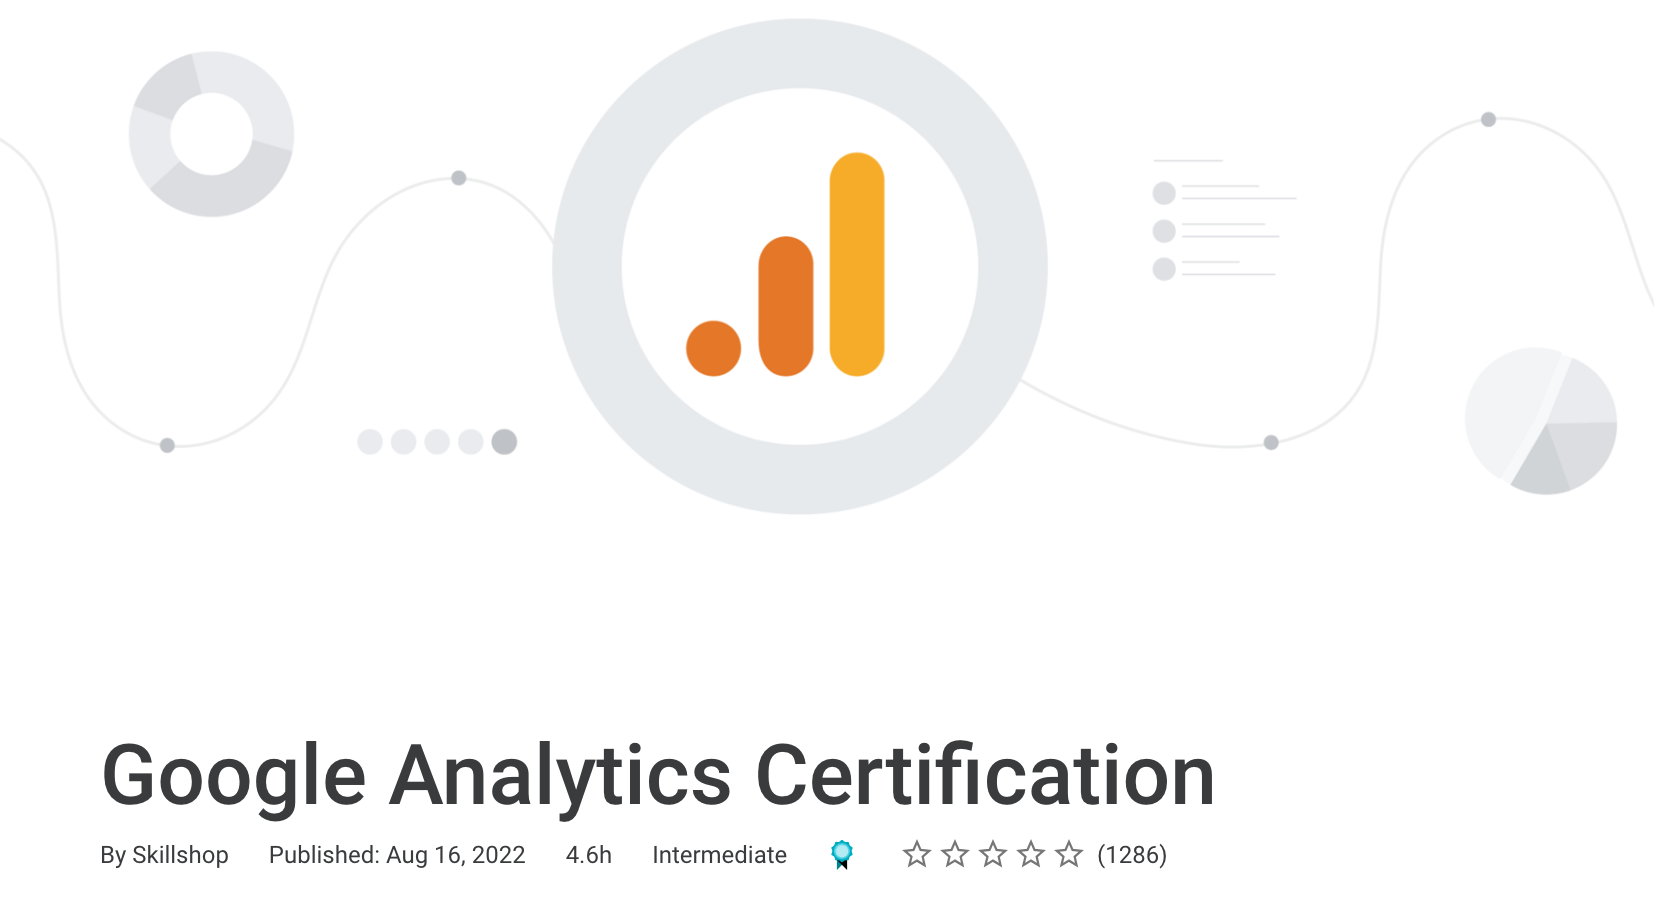 Google Analytics Certification by Google Skillshop